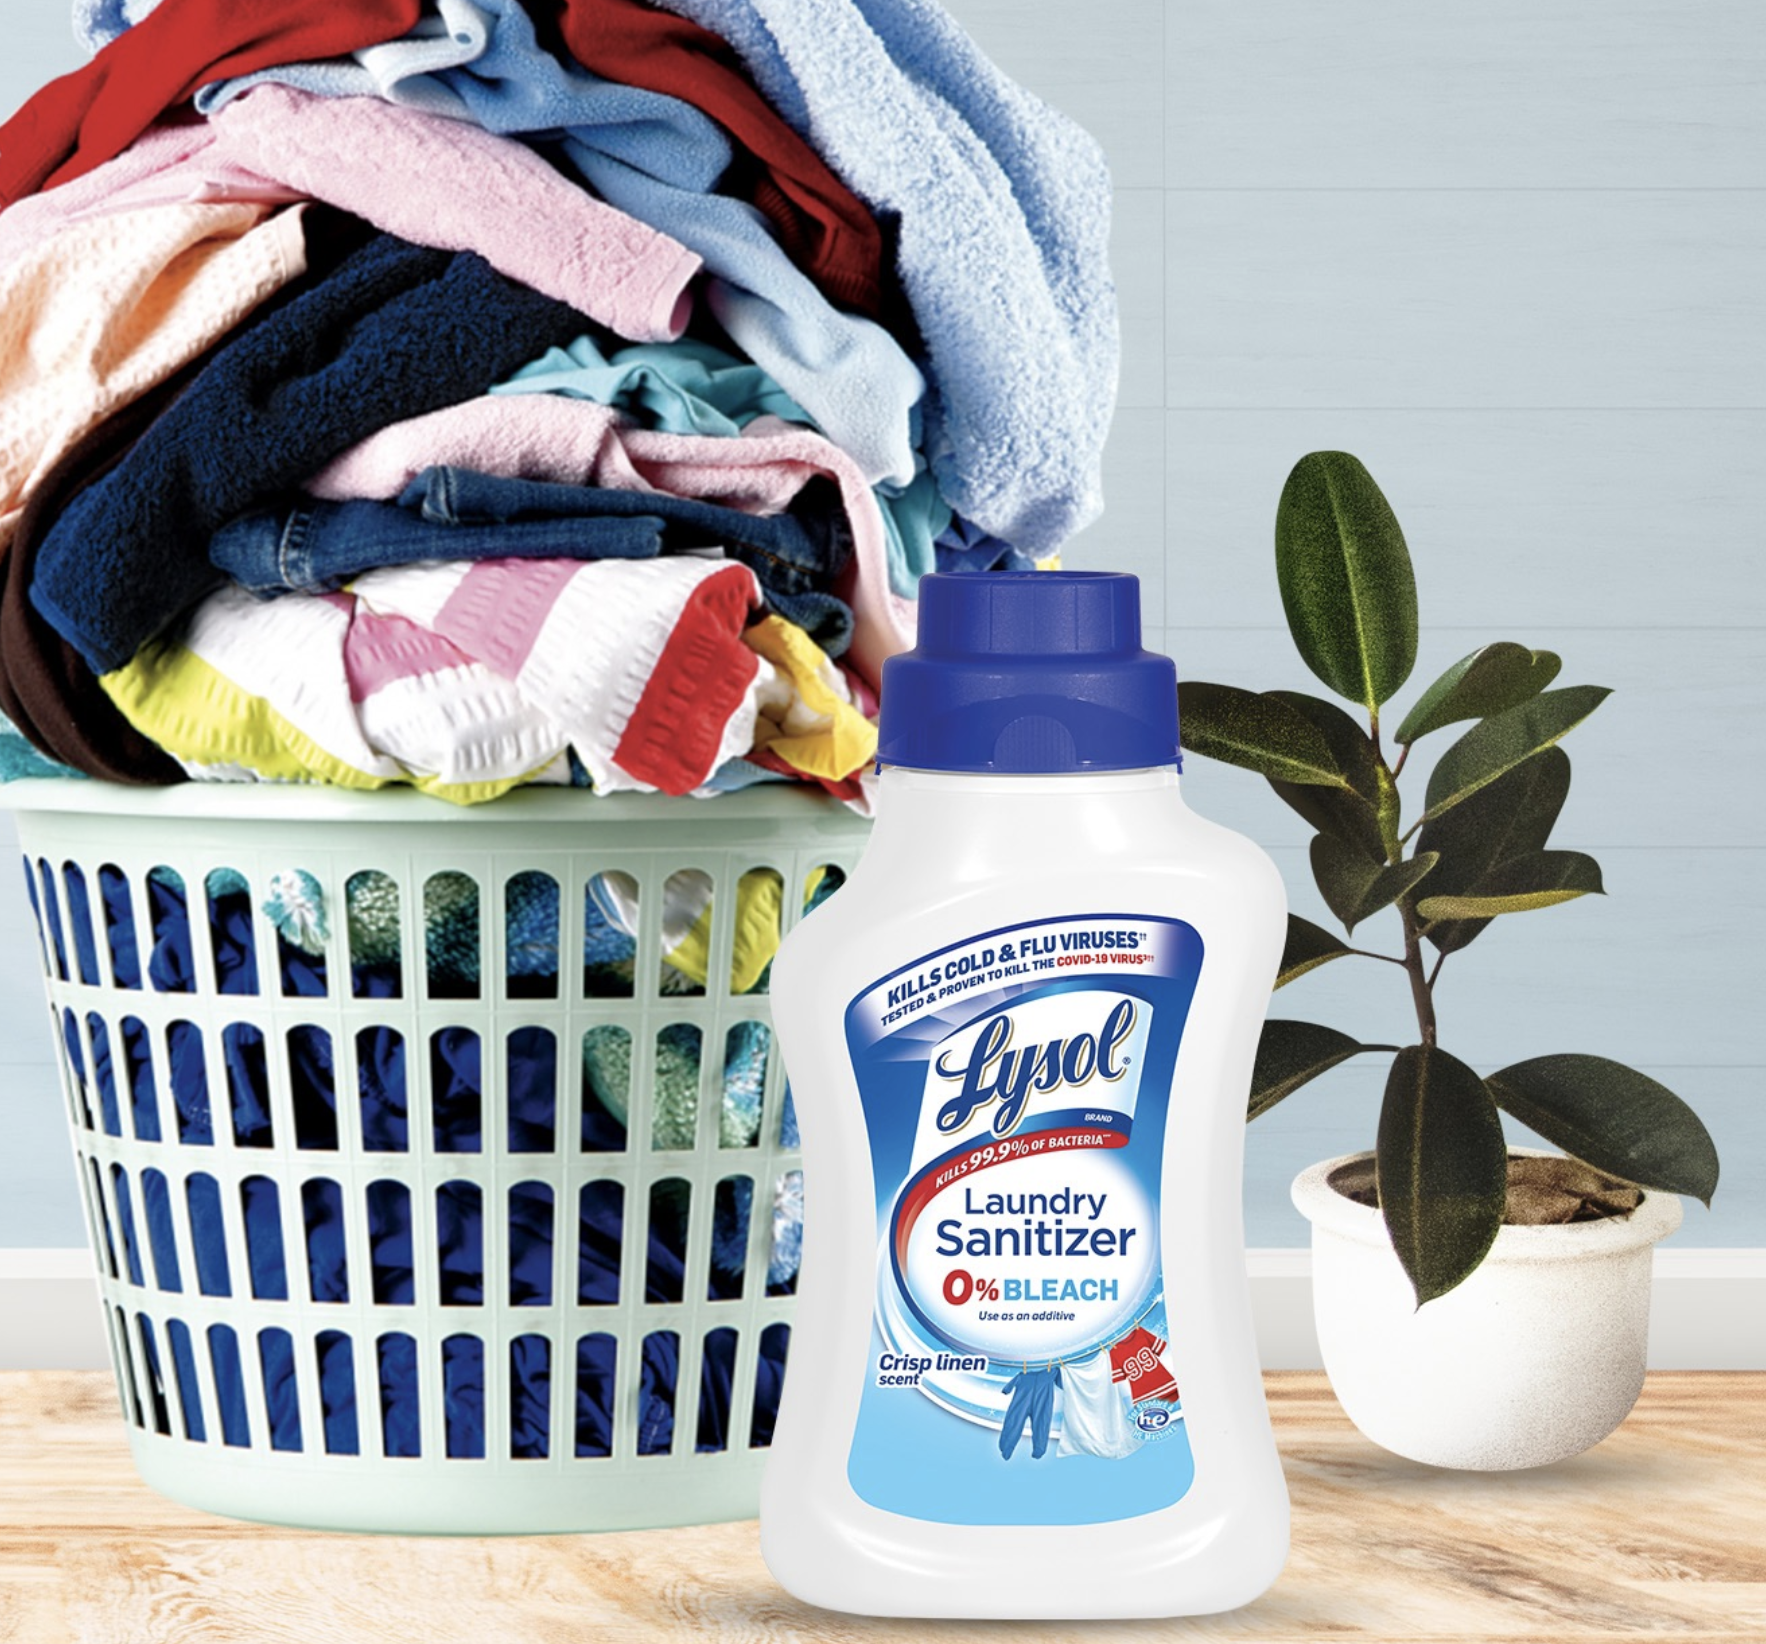 New* Clorox Laundry Sanitizer Deals Clorox Laundry Sanitizer Coupon